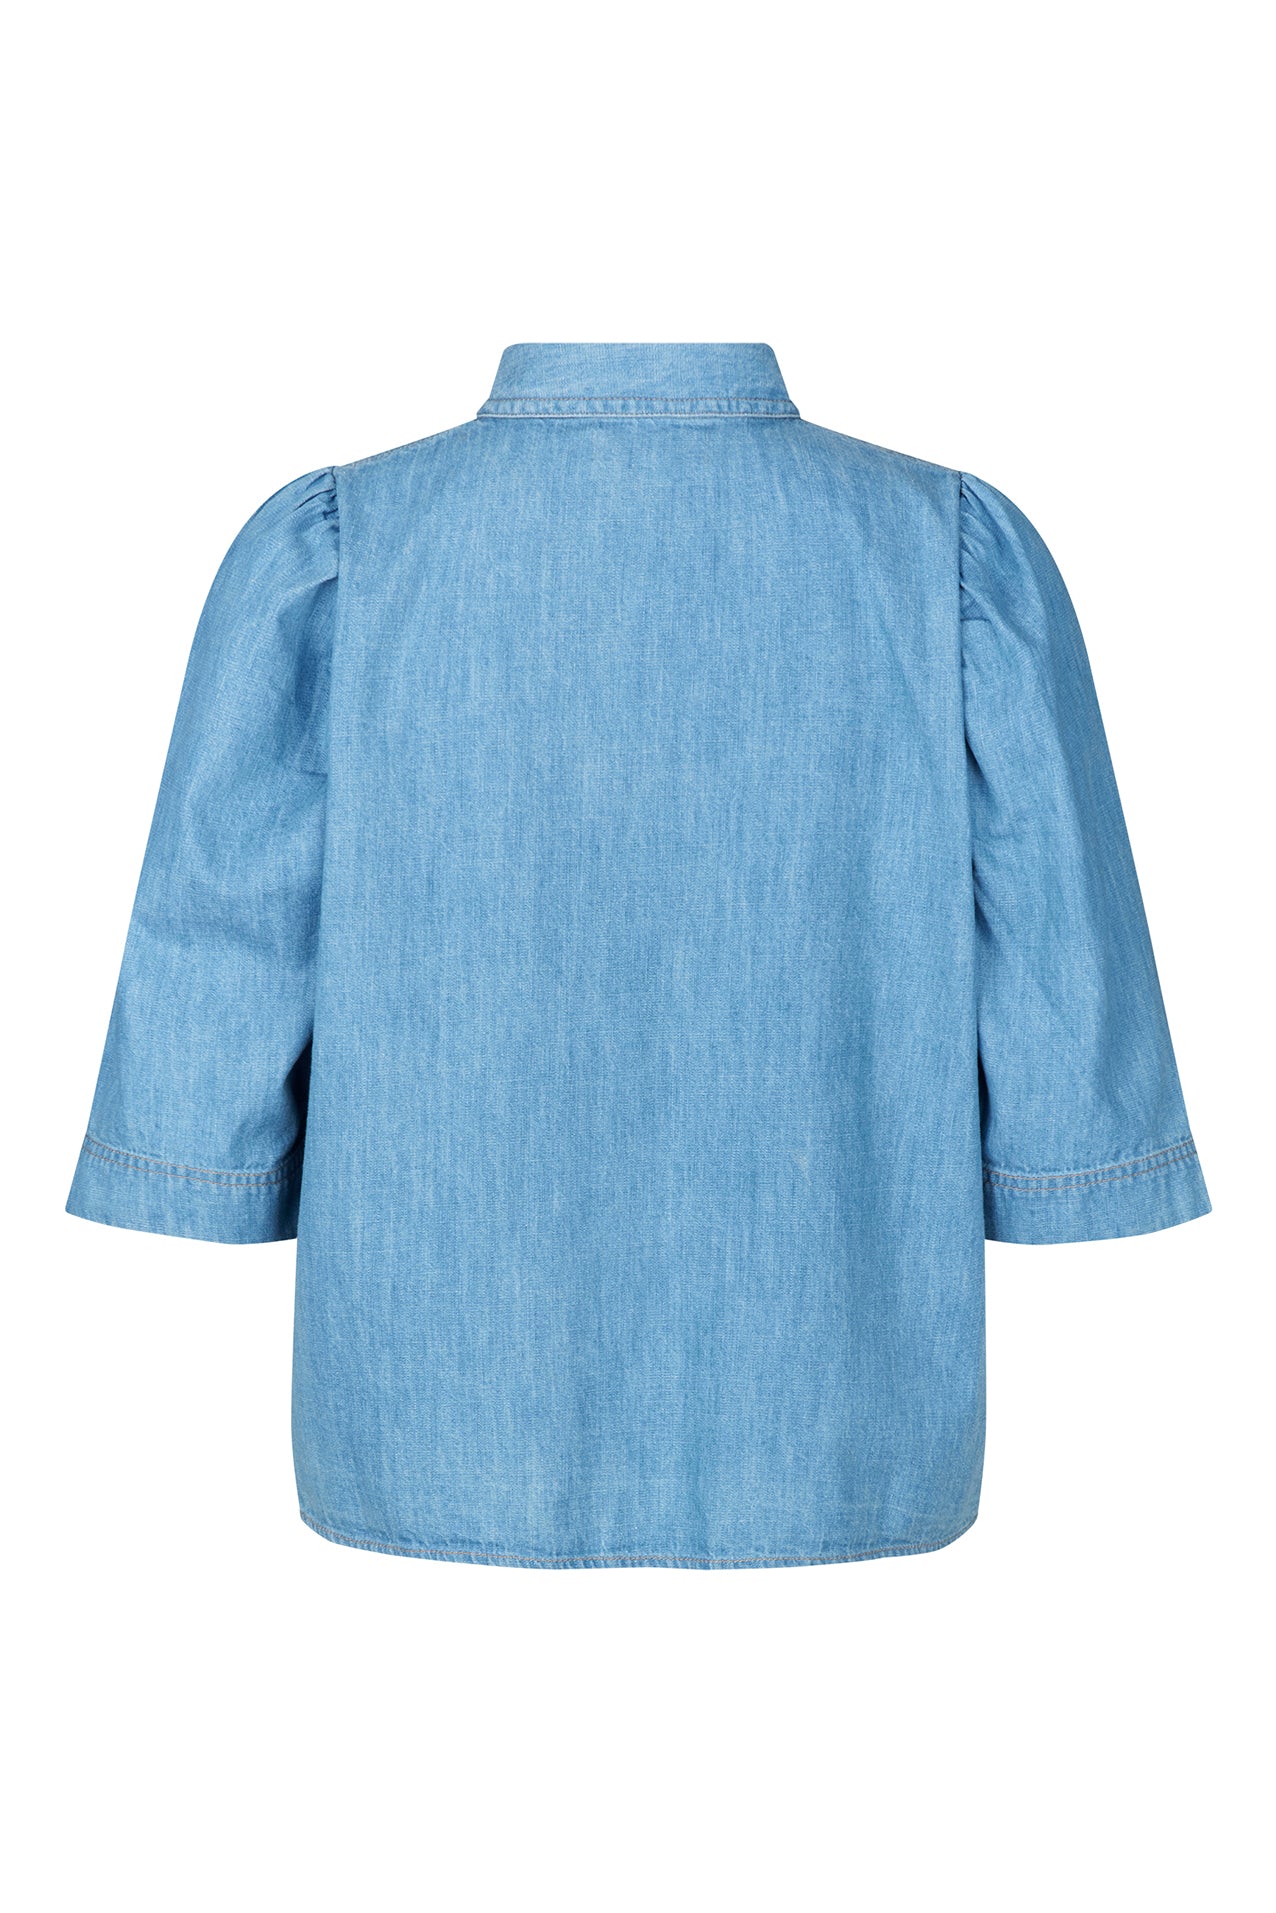 Lollys Laundry BonoLL Shirt SS Shirt 22 Light Blue